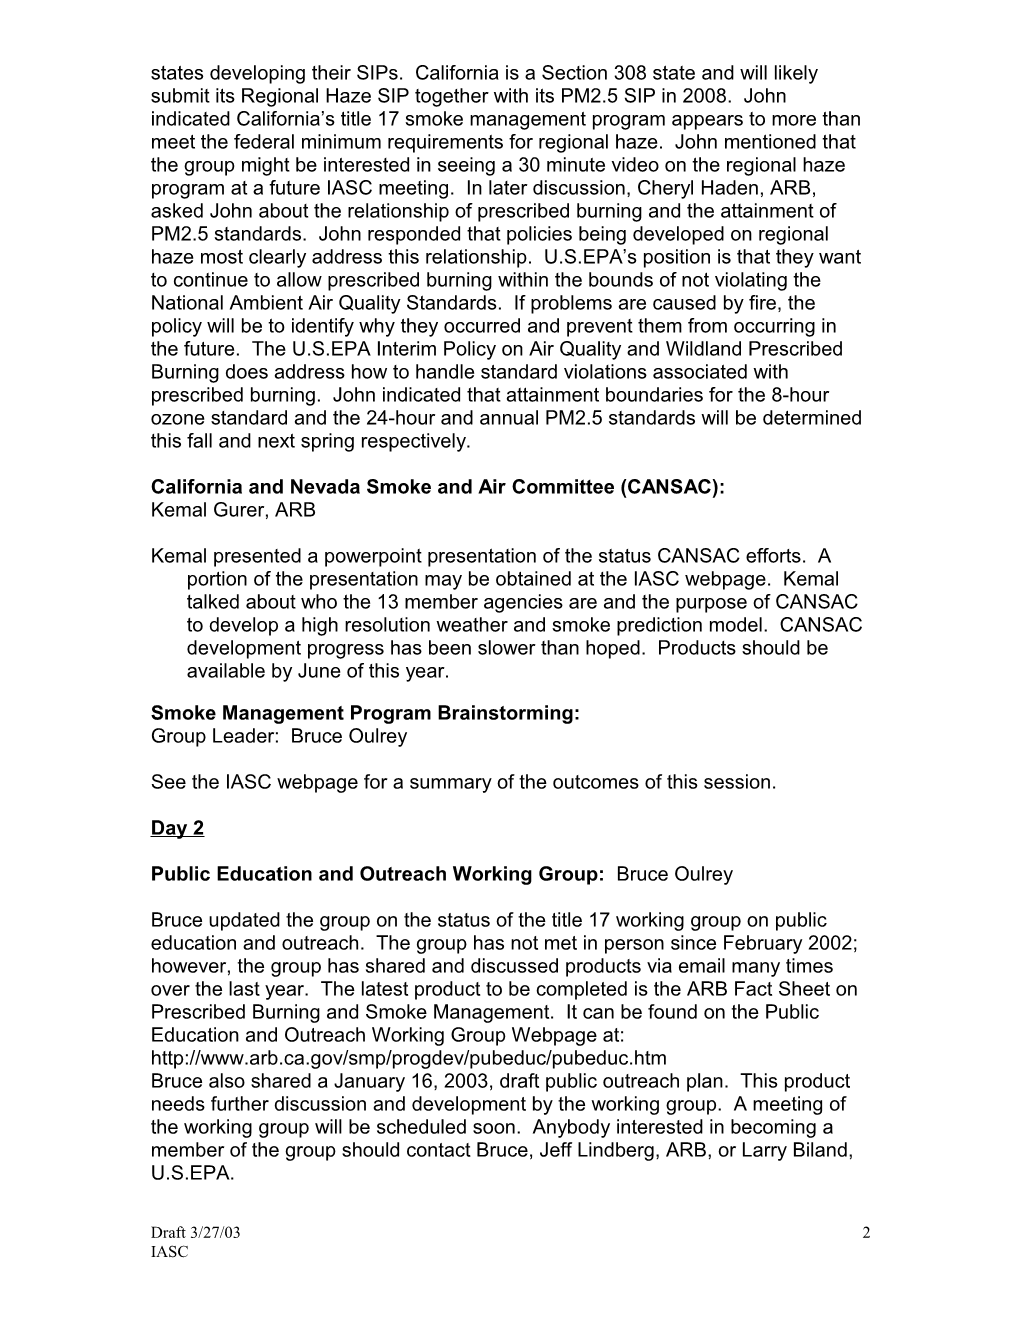 IASC Meeting Summary January 22-23, 2003